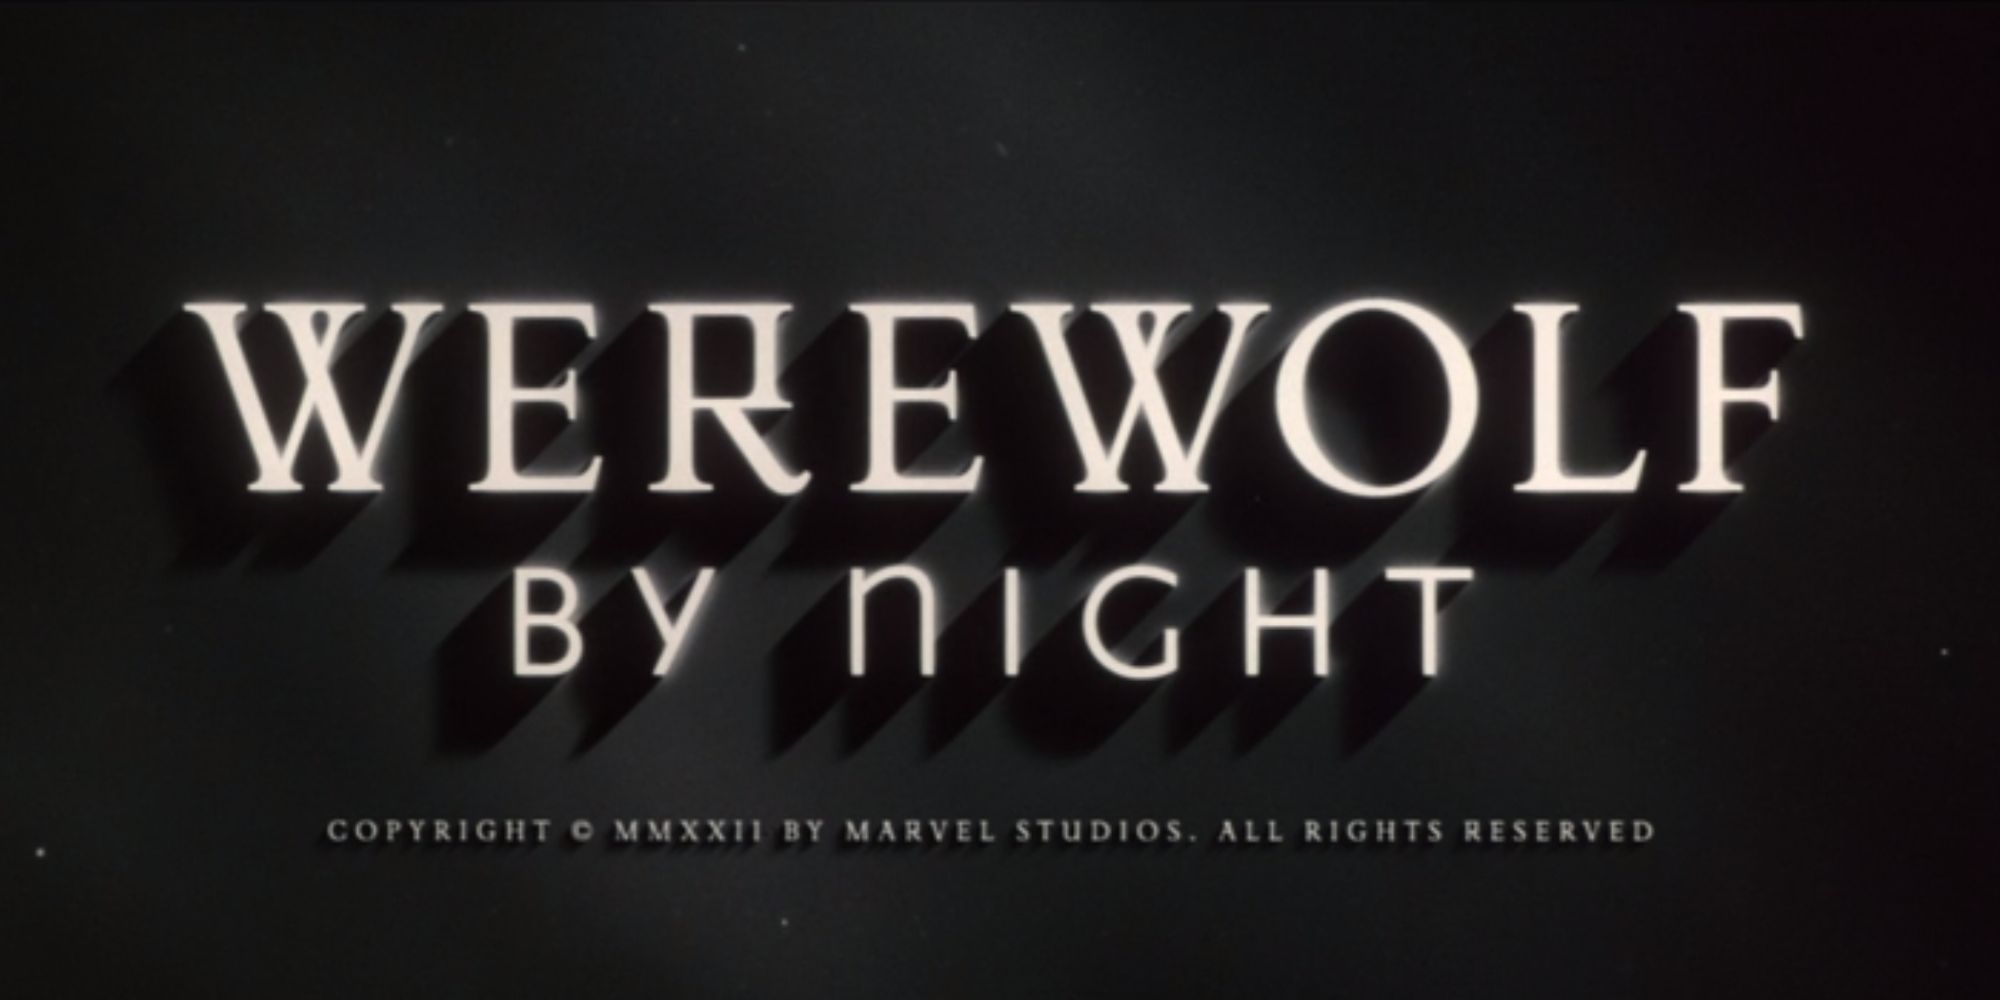 Werewolf By Night: 10 Similarities To Classic Universal Monster Movies